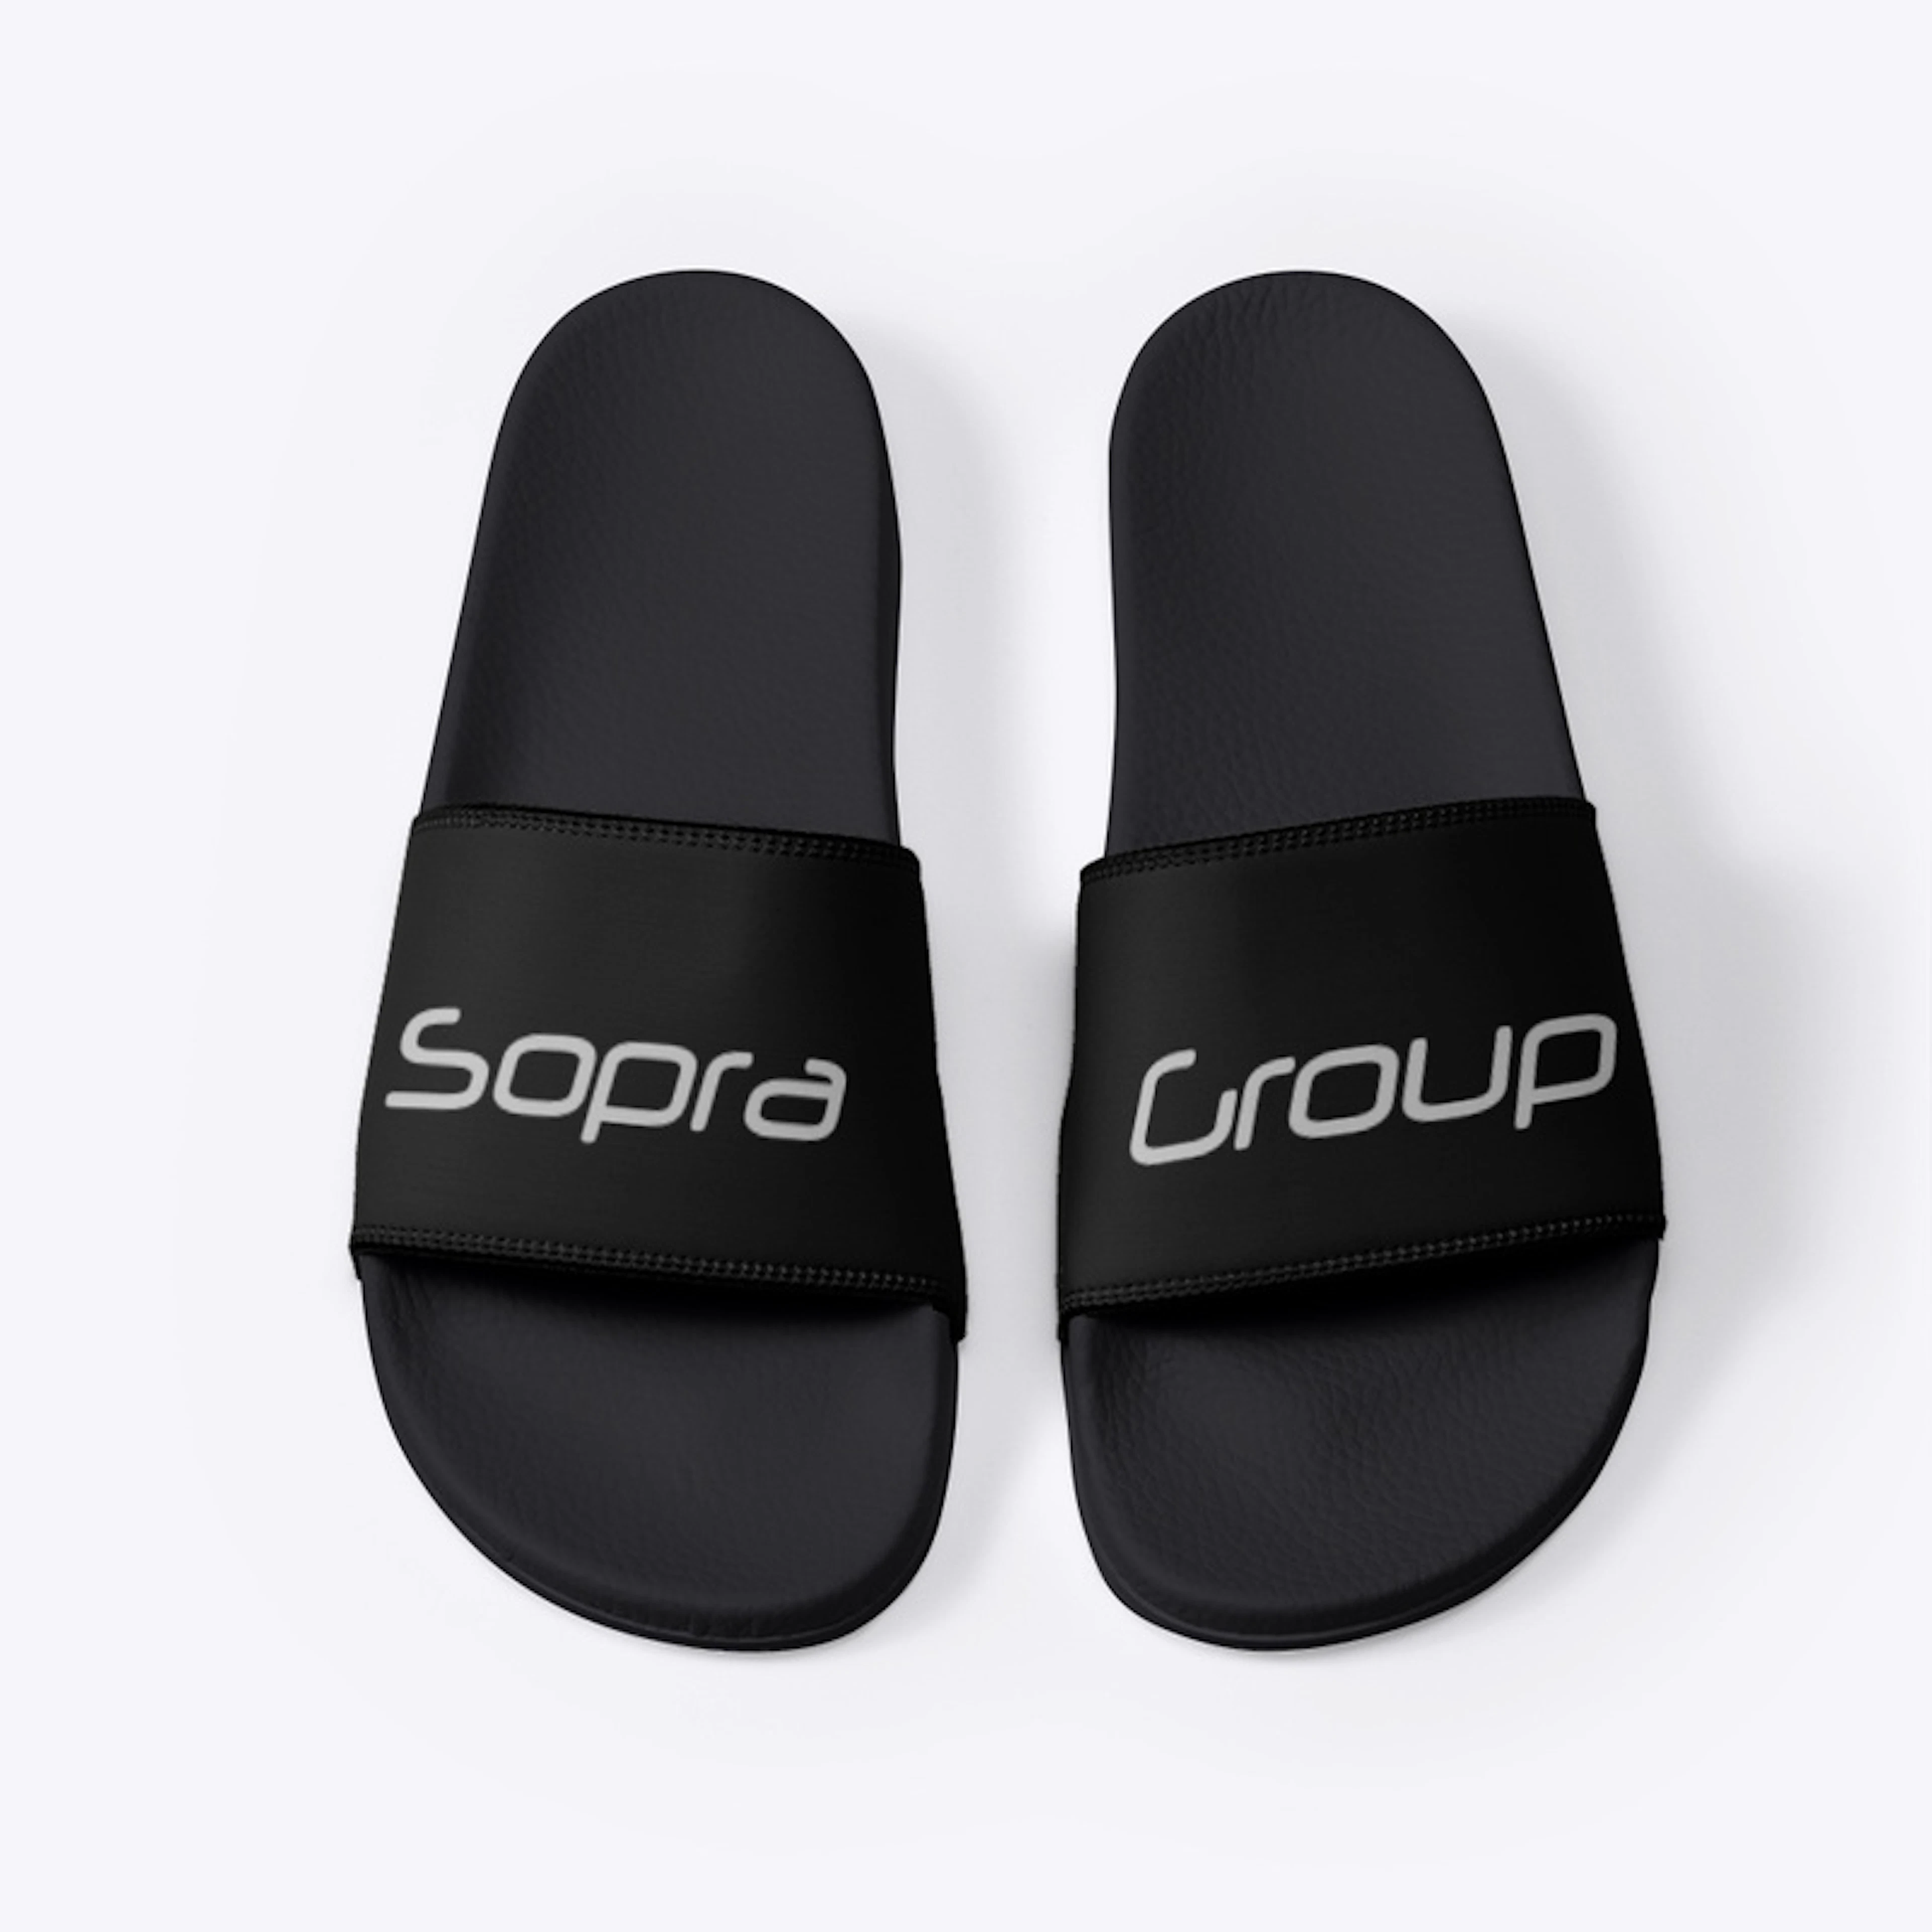 Sopra Slides - Black 